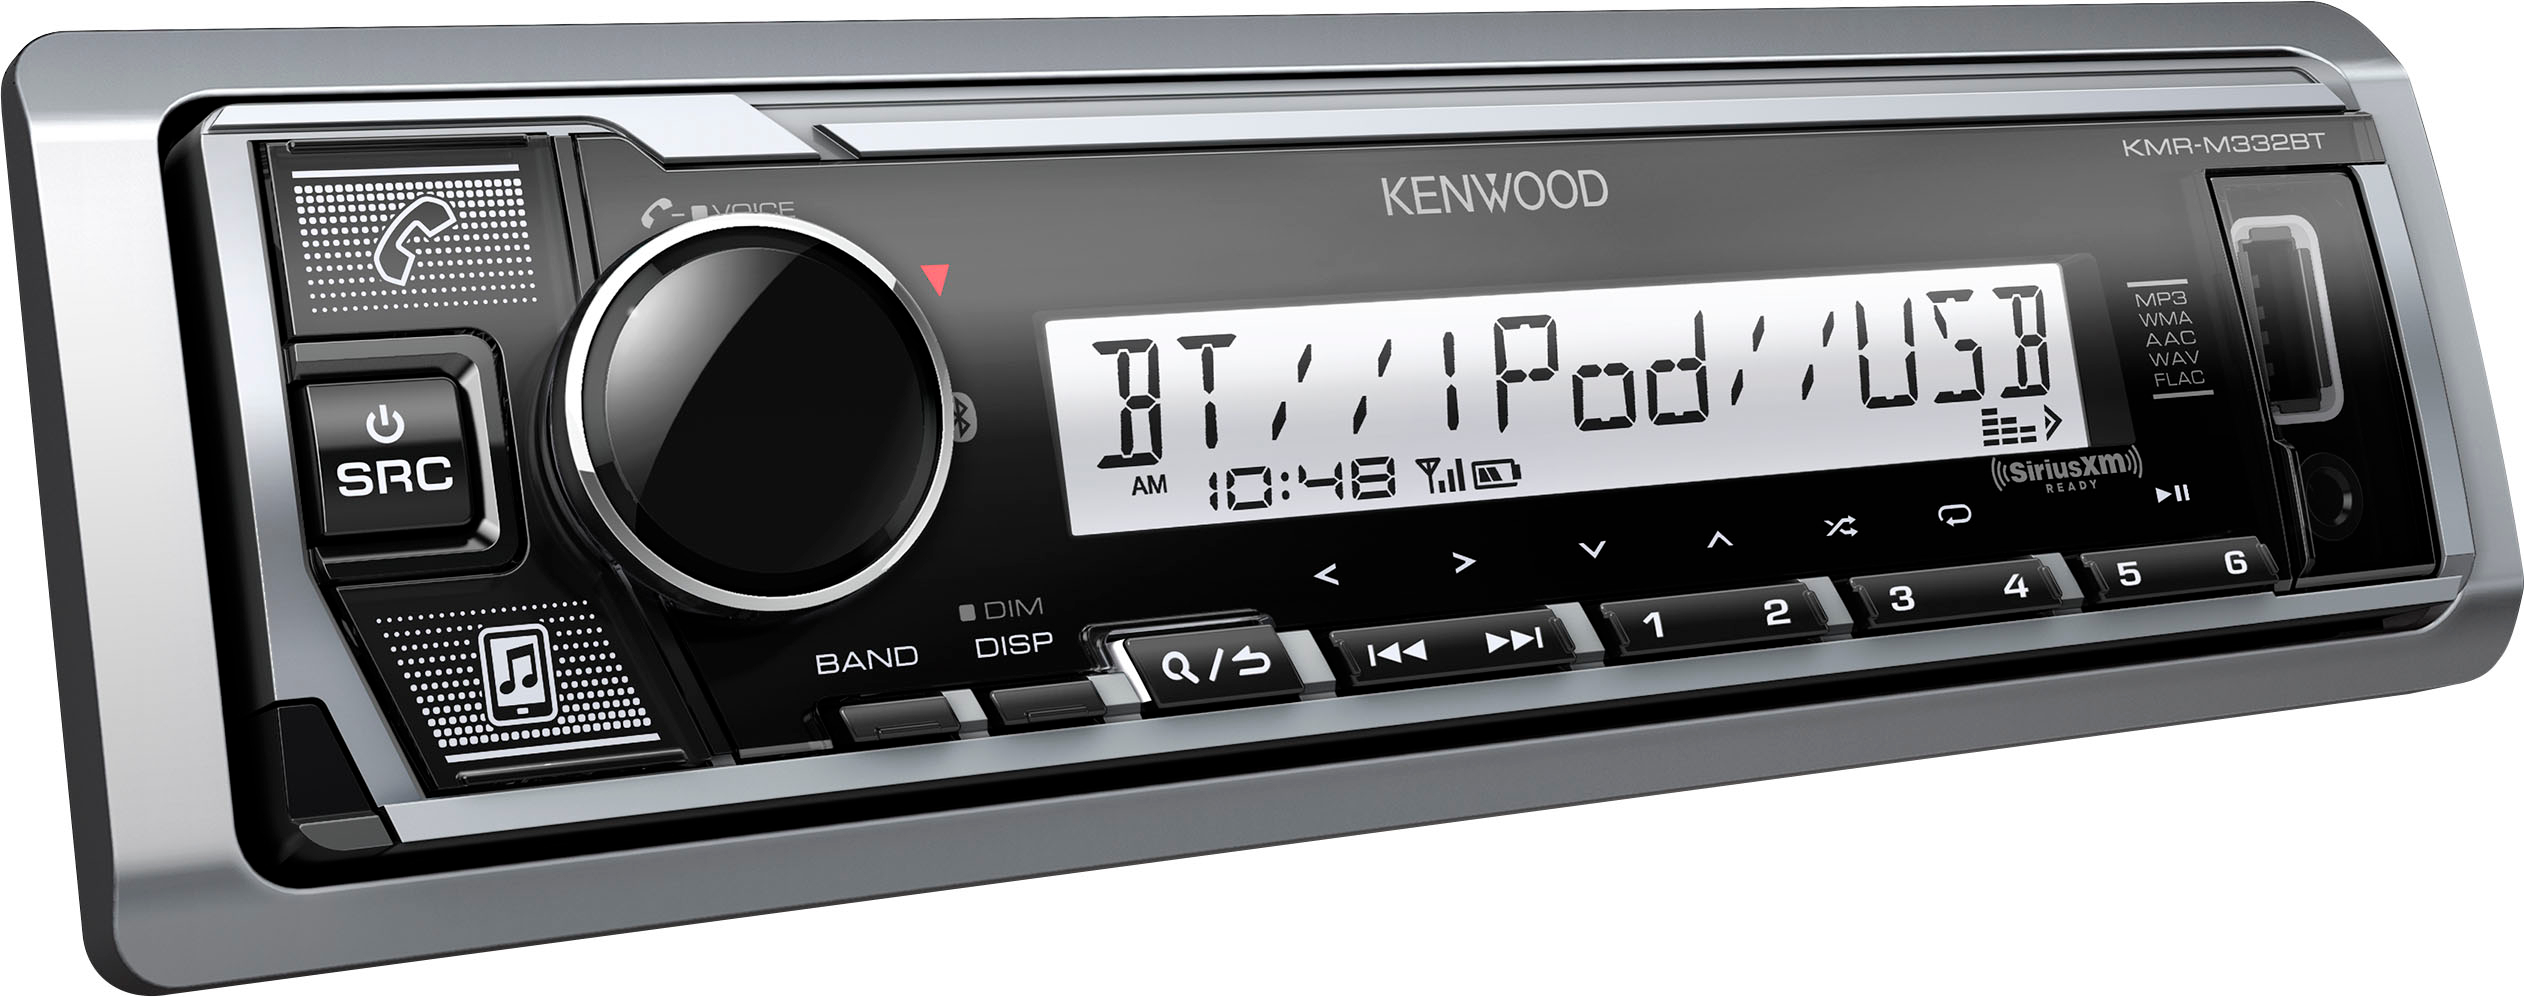 Kenwood PKGMR328BTA AM/FM Radio Receiver USB Bluetooth IPhone/Android  Control Pandora IHeart Radio SiriusXM Satellite Ready Marine Stereo With 4  Waterproof Speakers And 400 Watt Amplifier - Rock The Boat Audio